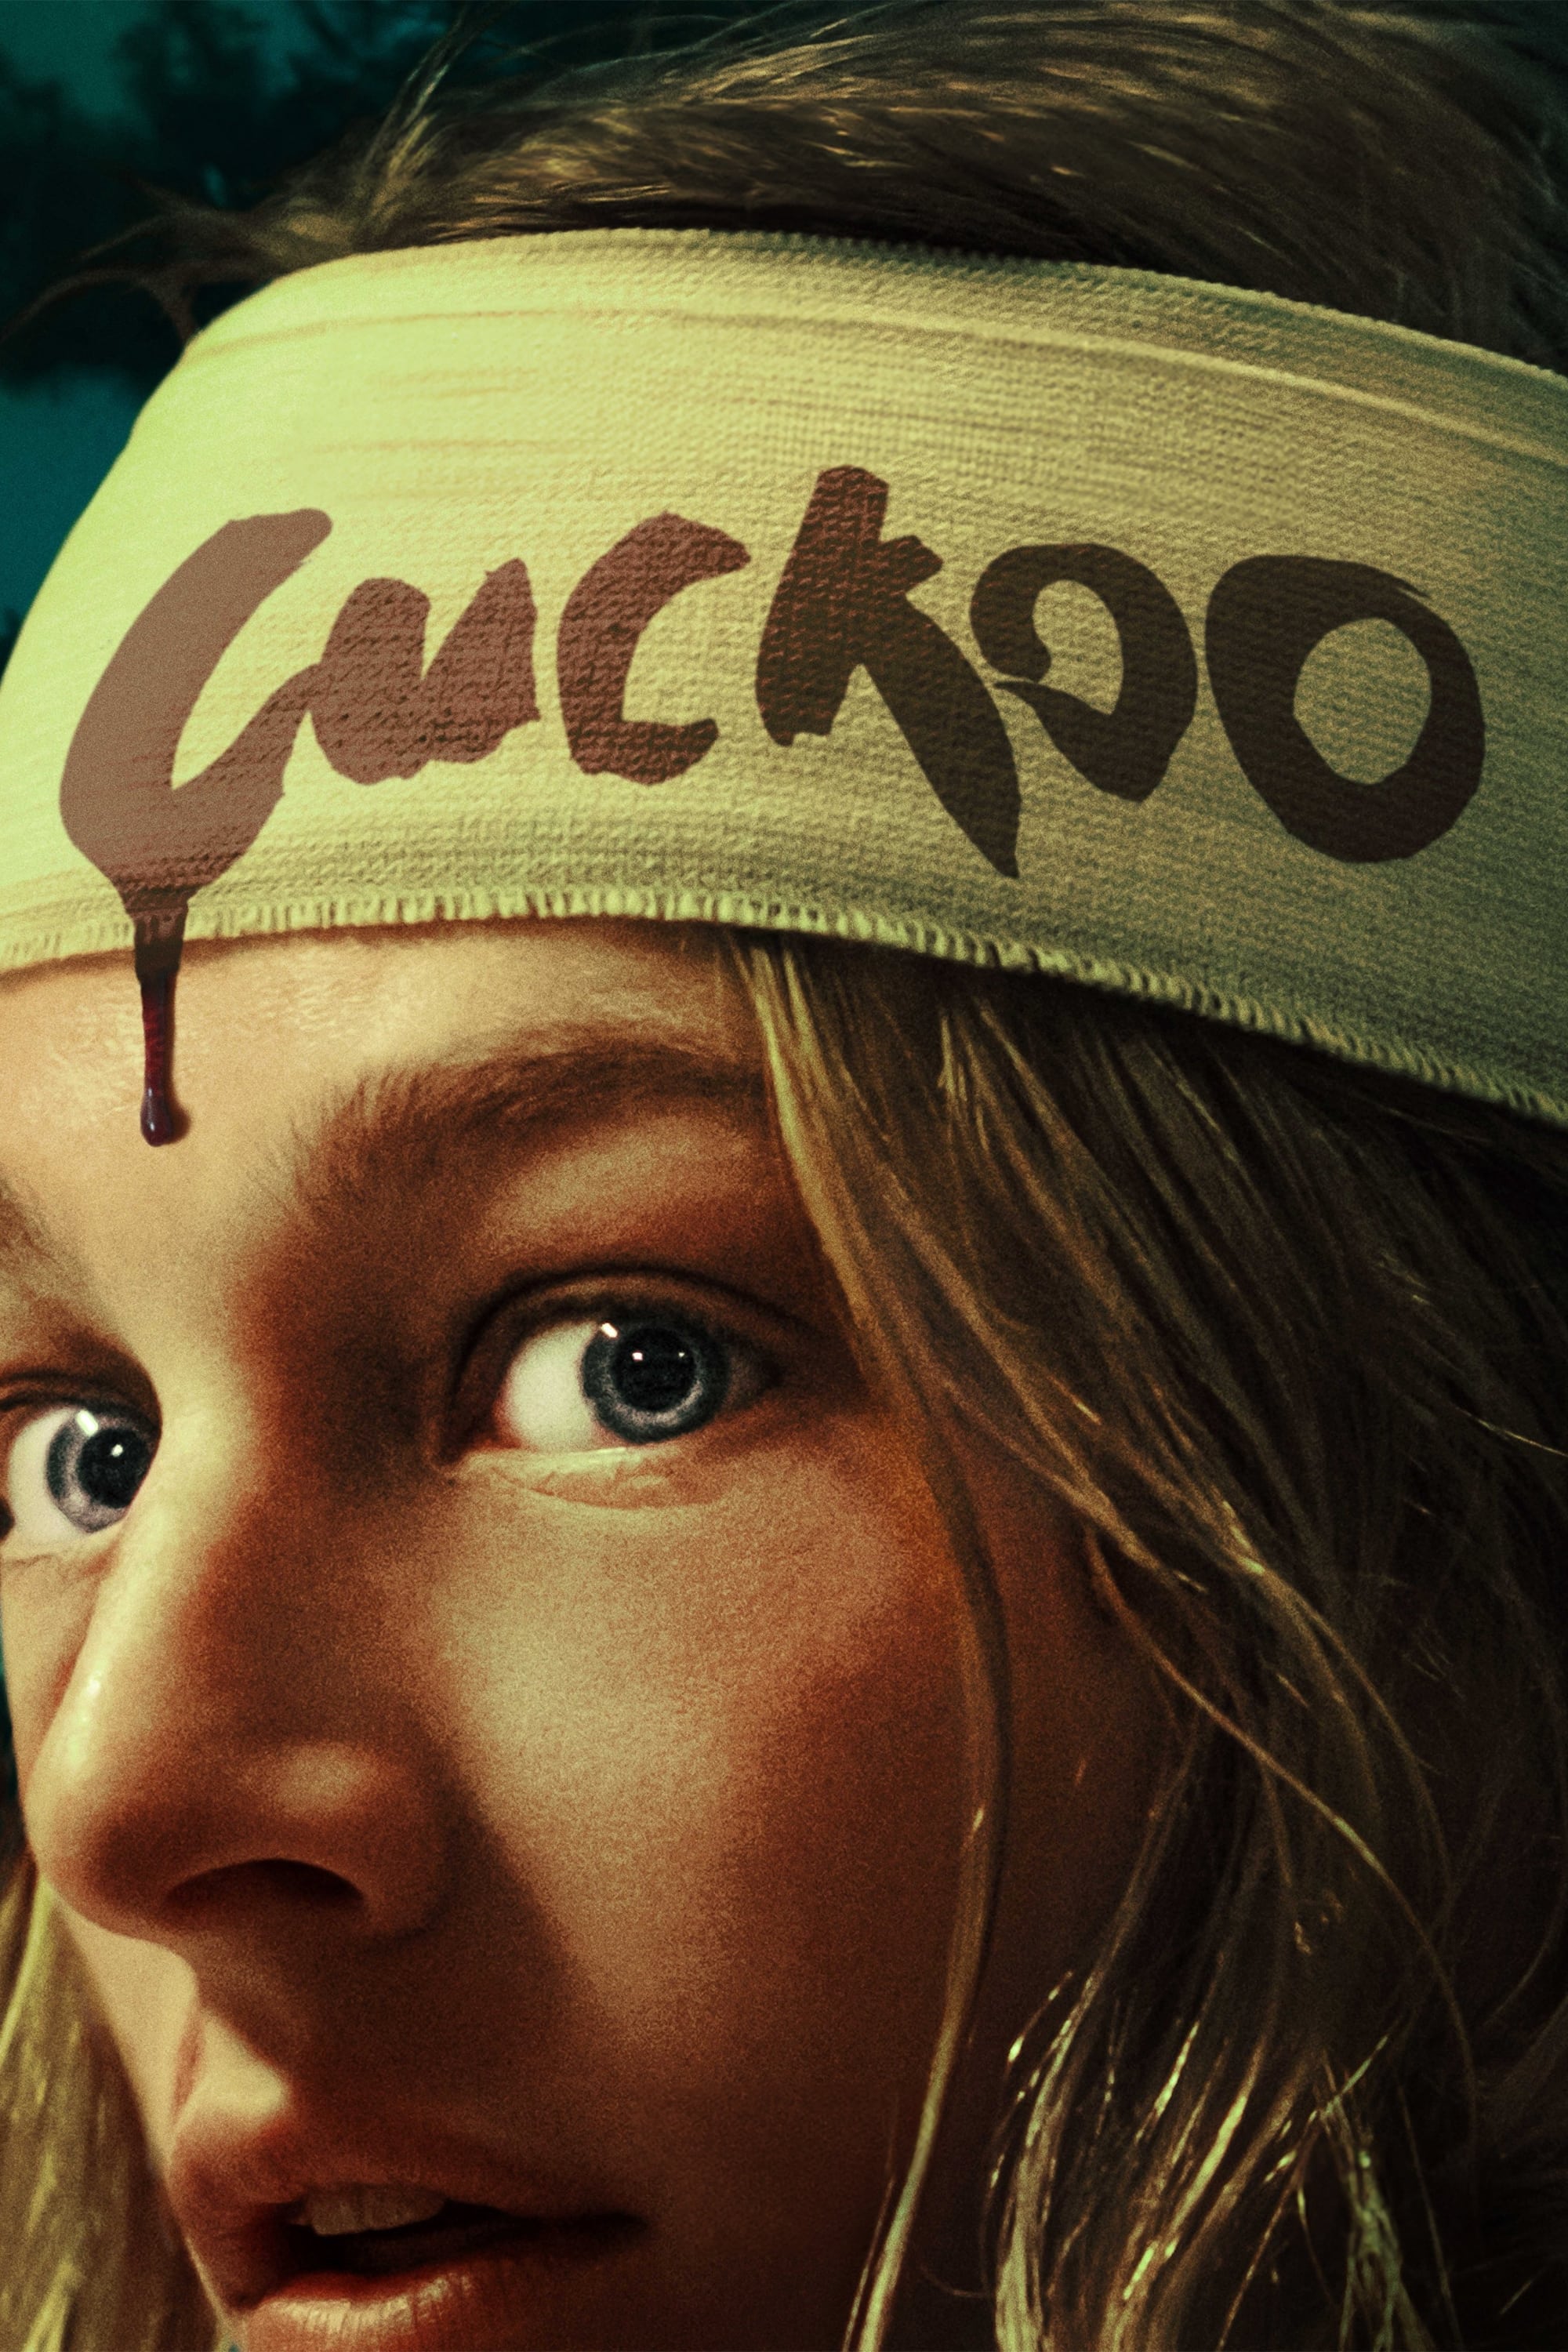 Cuckoo film